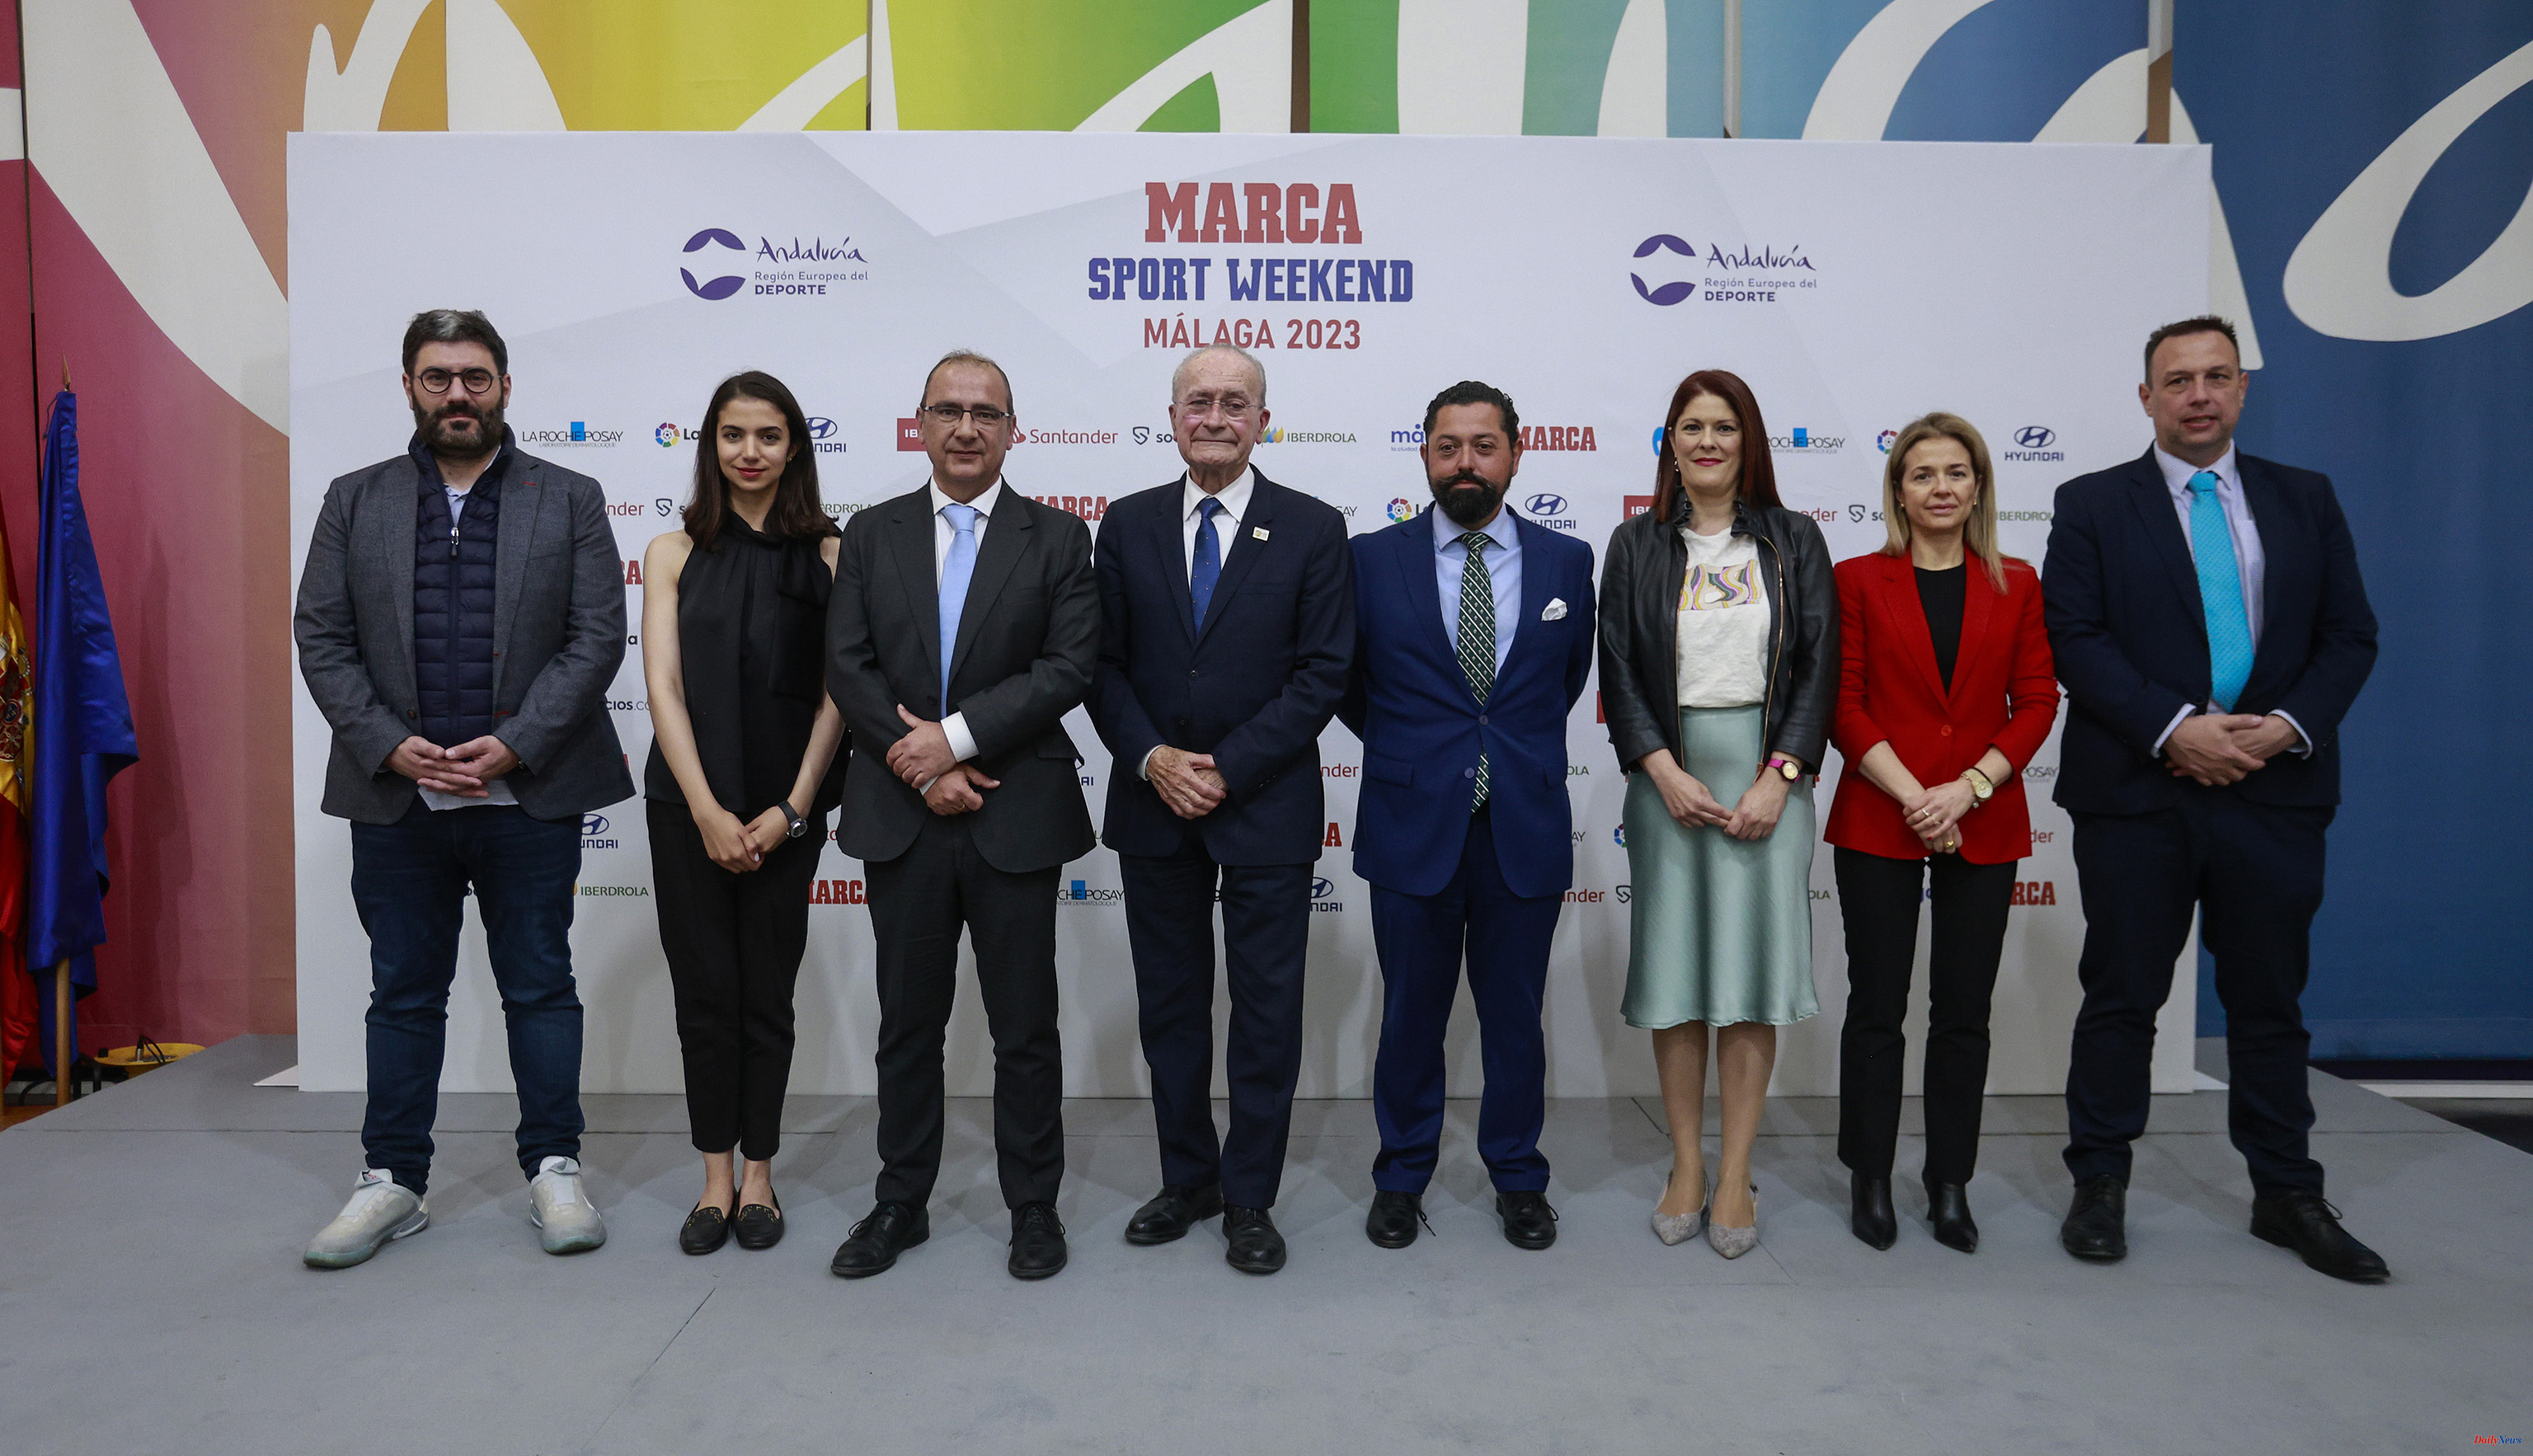 Deportes Málaga will host a new edition of MARCA Sport Weekend